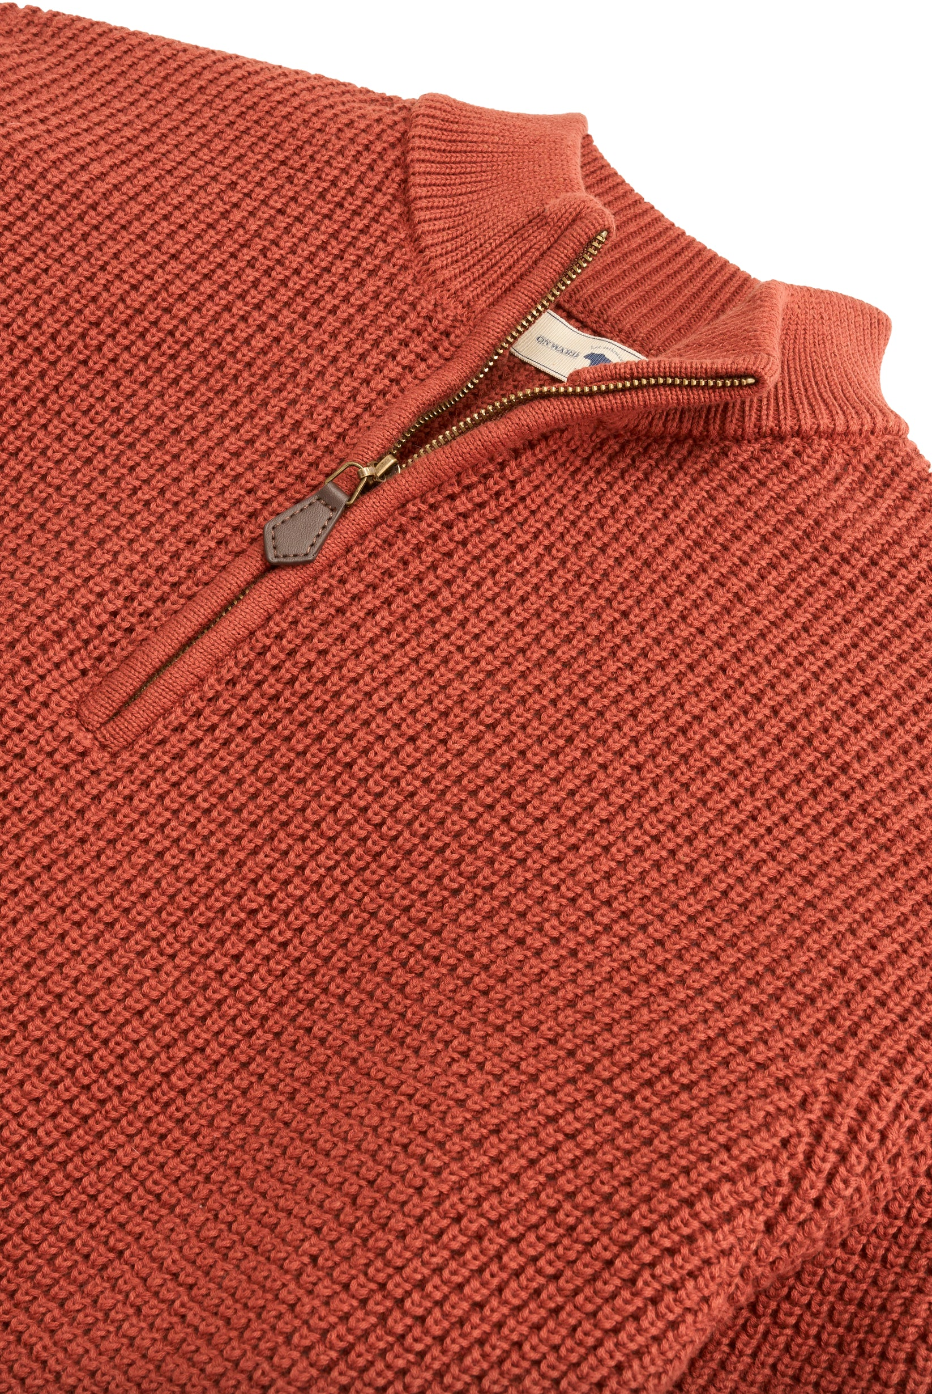 Angler Sweater-Golden Oak-Final Sale